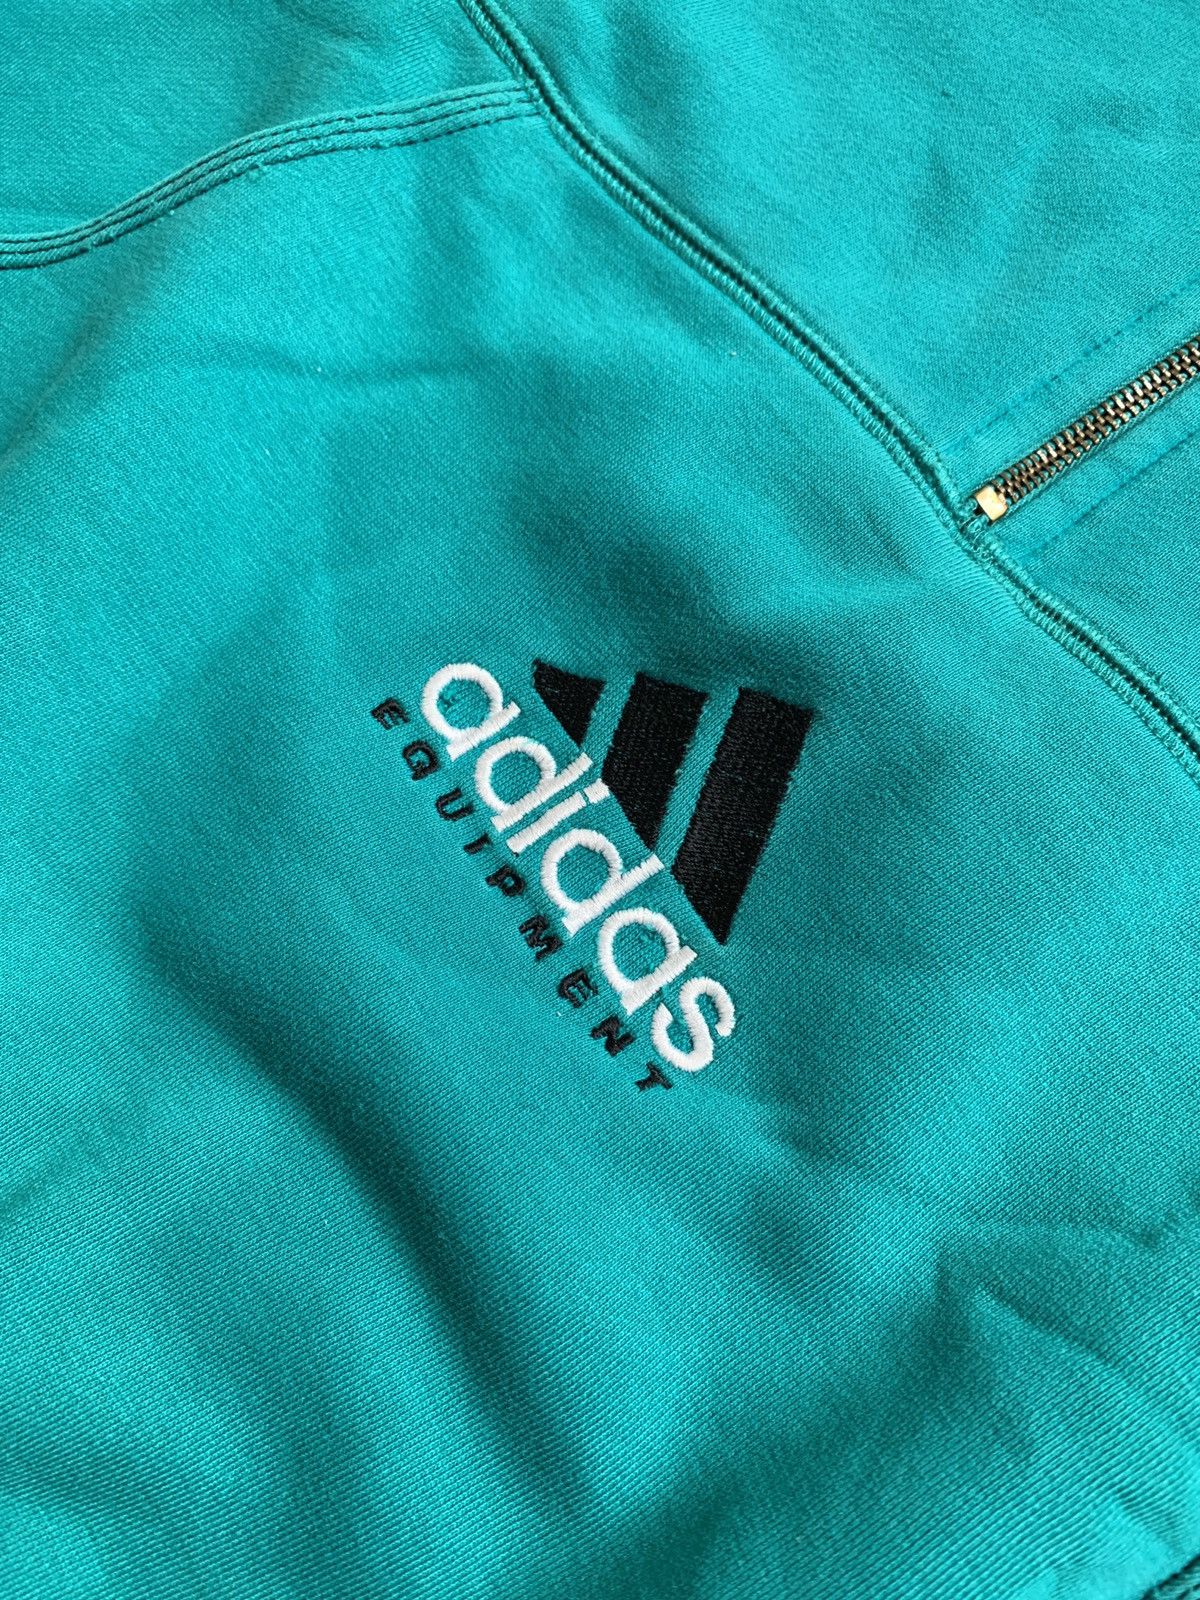 Adidas 90s Adidas Equipment Rare Vintage 1/3 Zip Sweatshirt Anorak Size US M / EU 48-50 / 2 - 5 Thumbnail